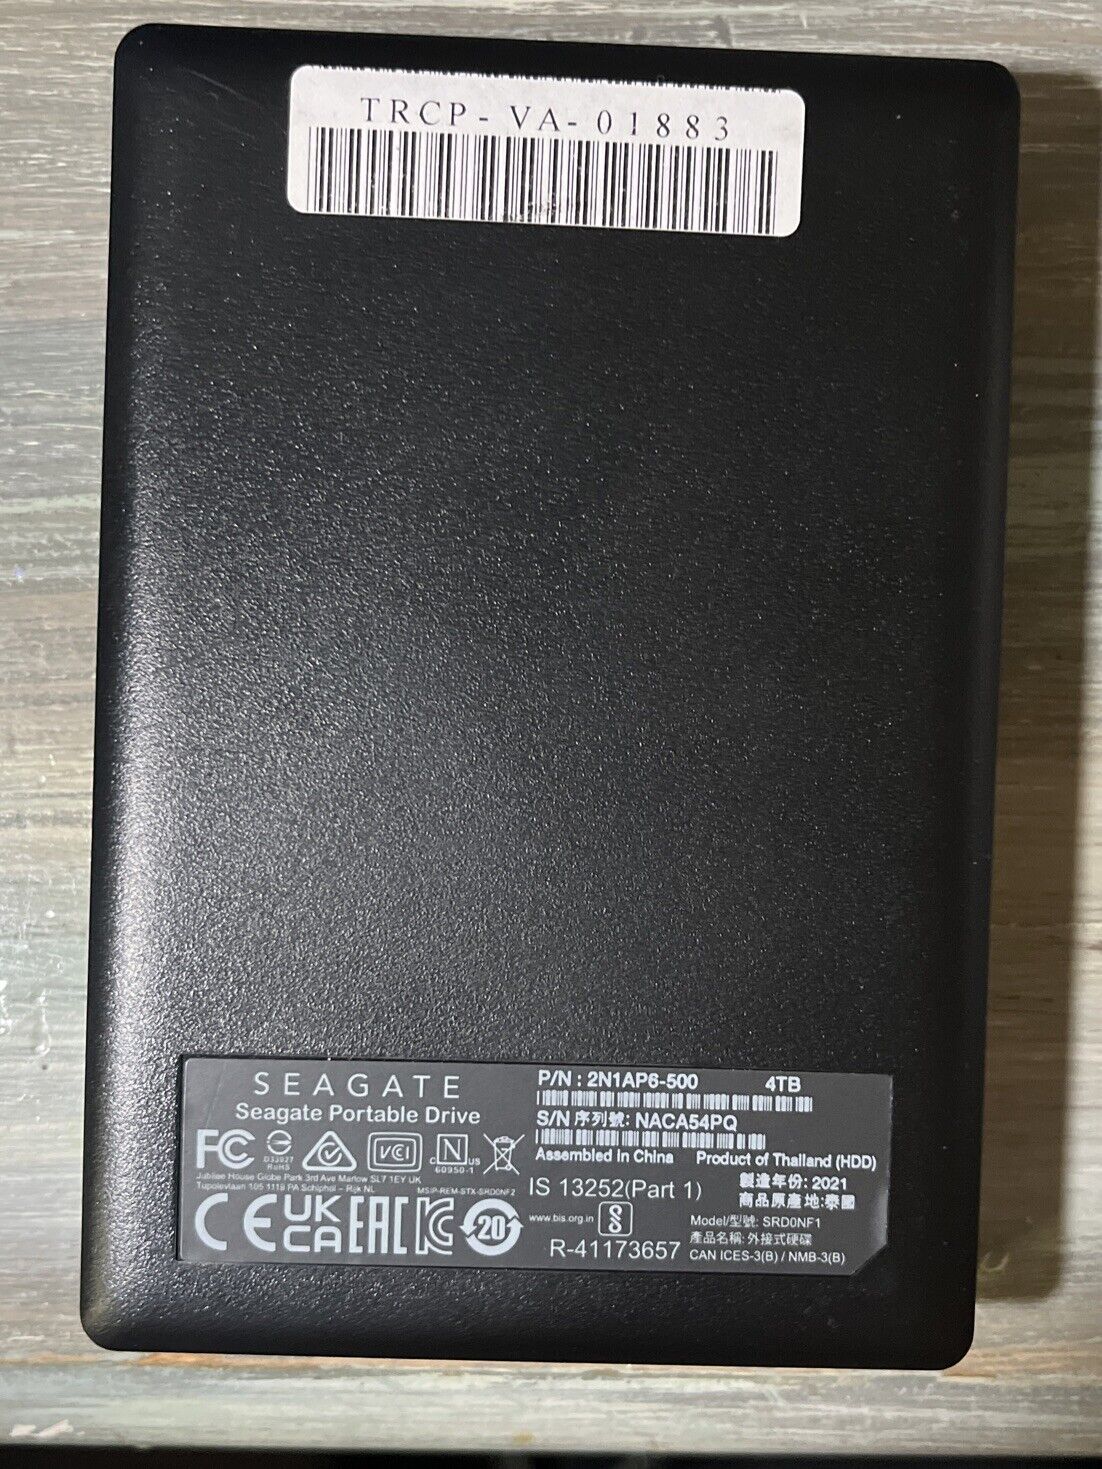 Seagate 4TB External USB 3.0 Portable Hard Drive STGX4000400 HDD